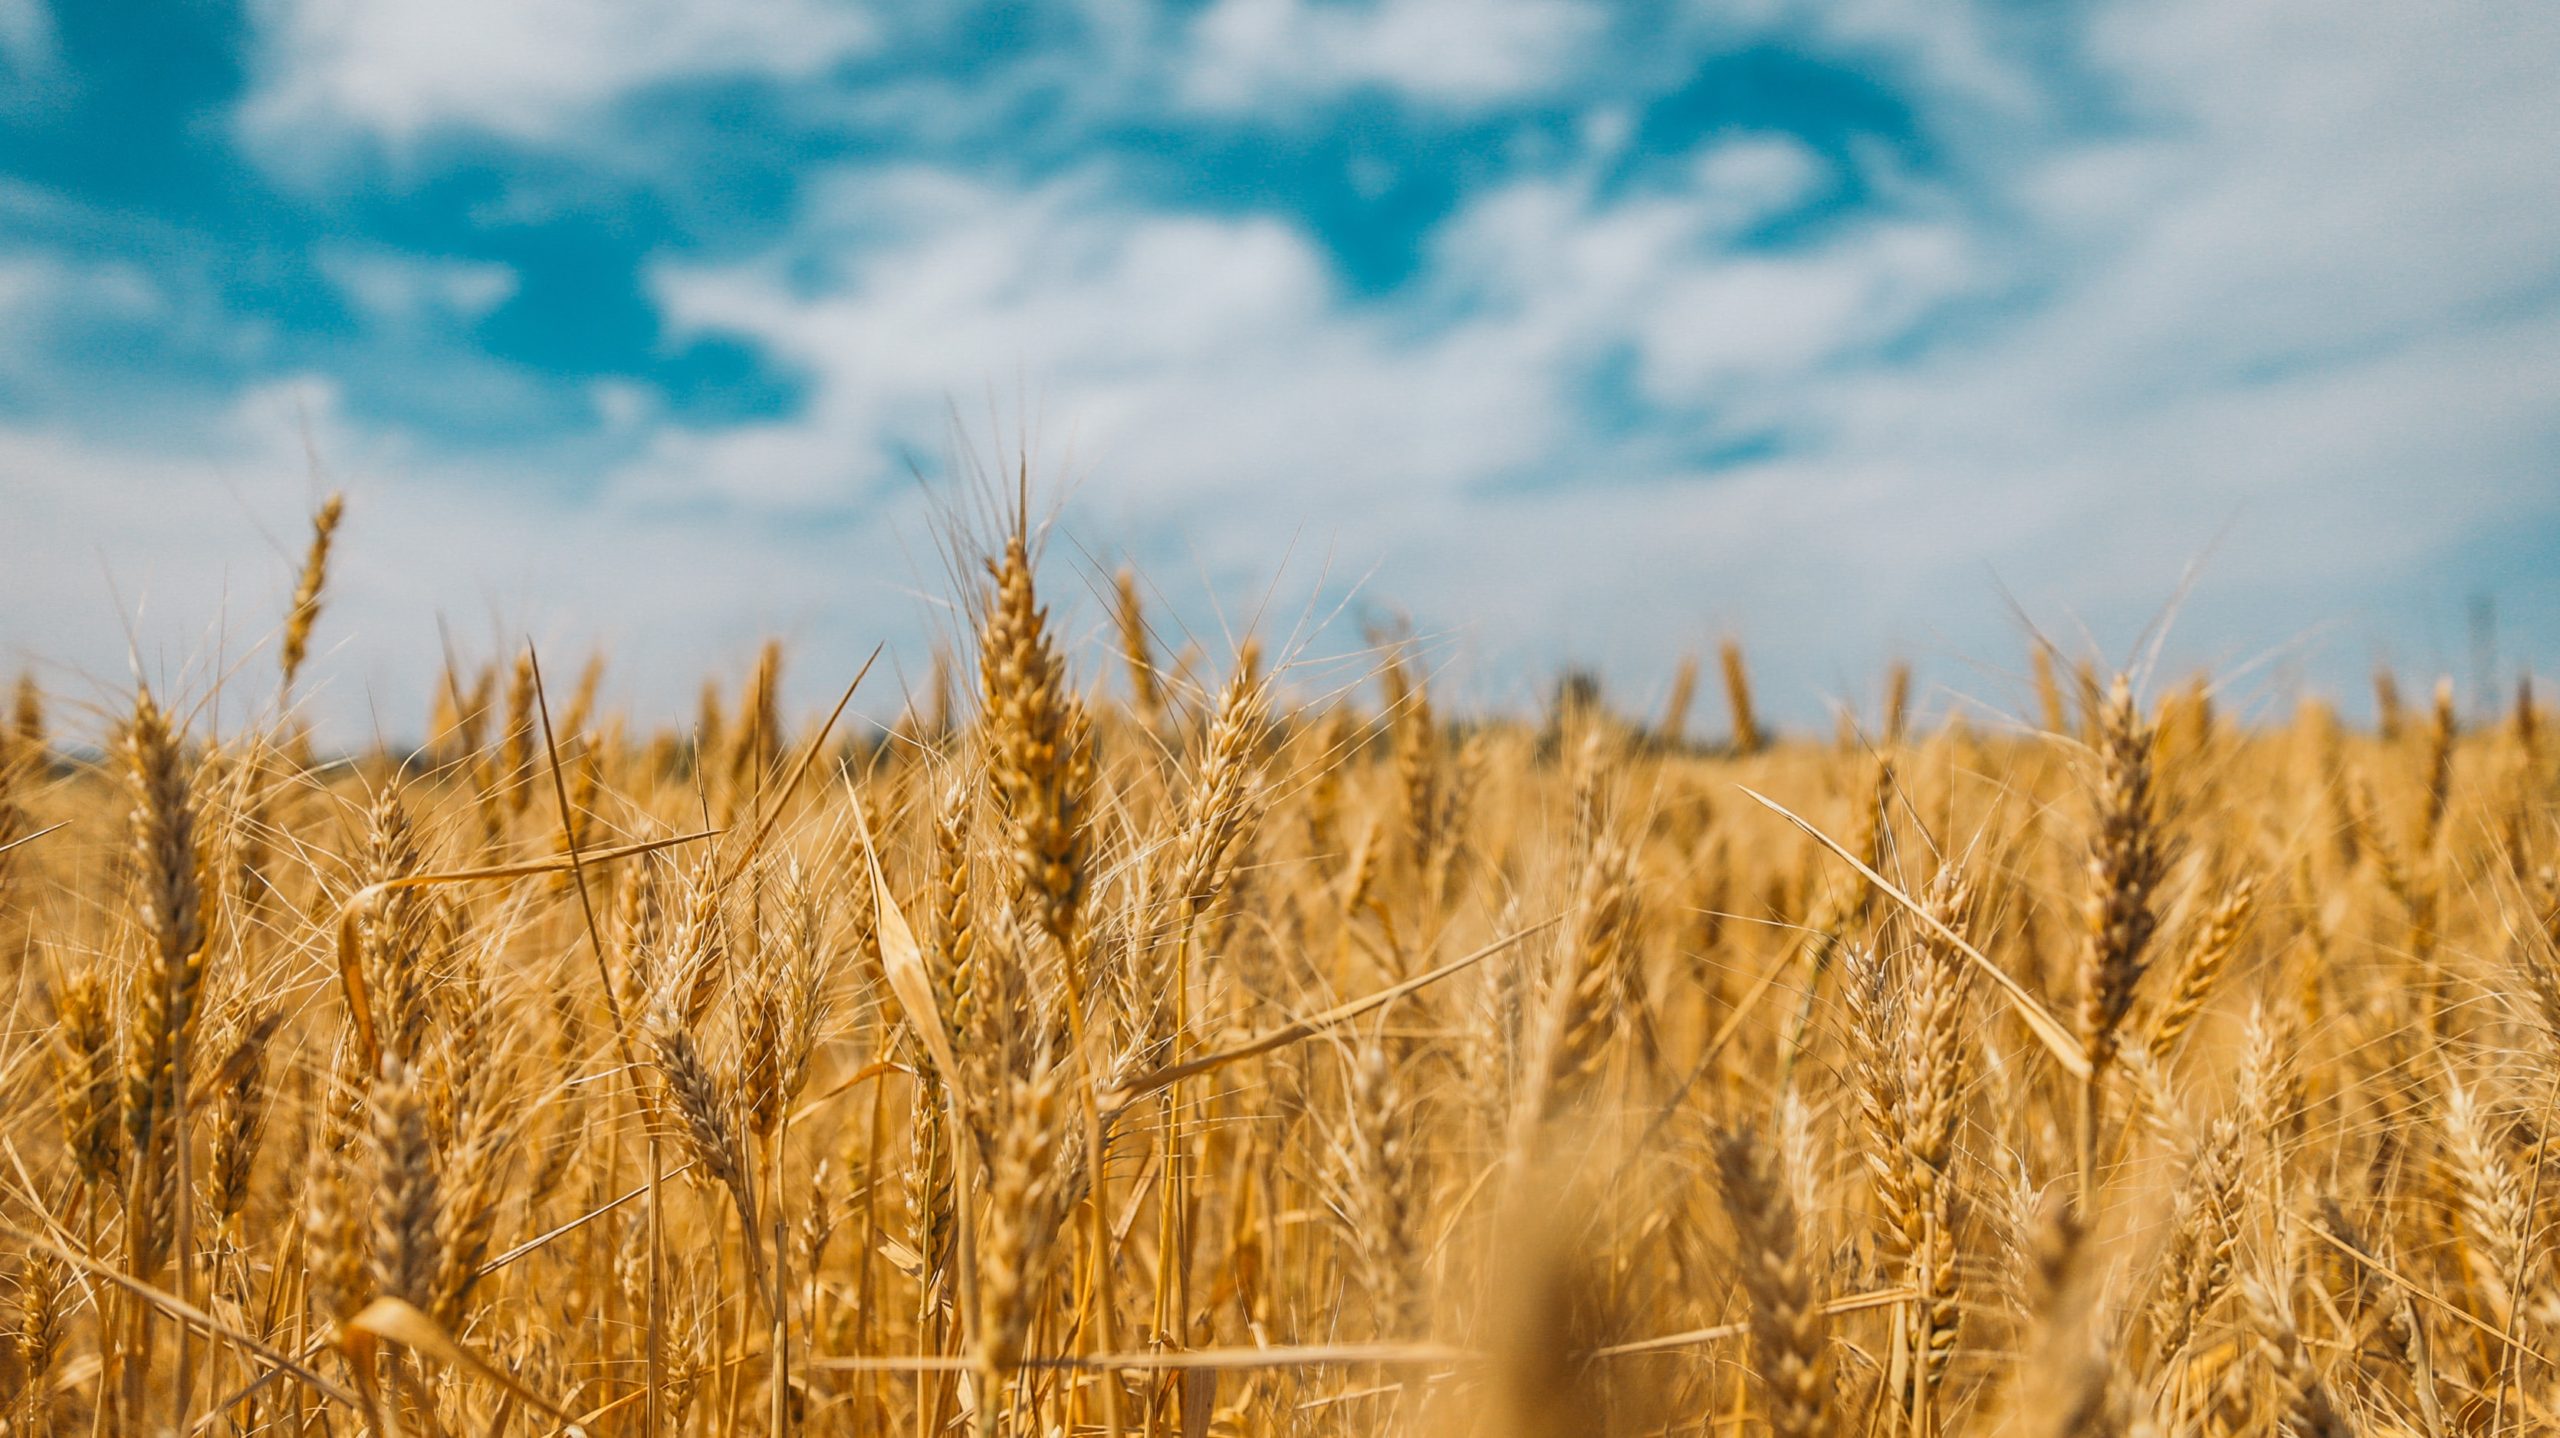 A field of wheat beneath a blue sky